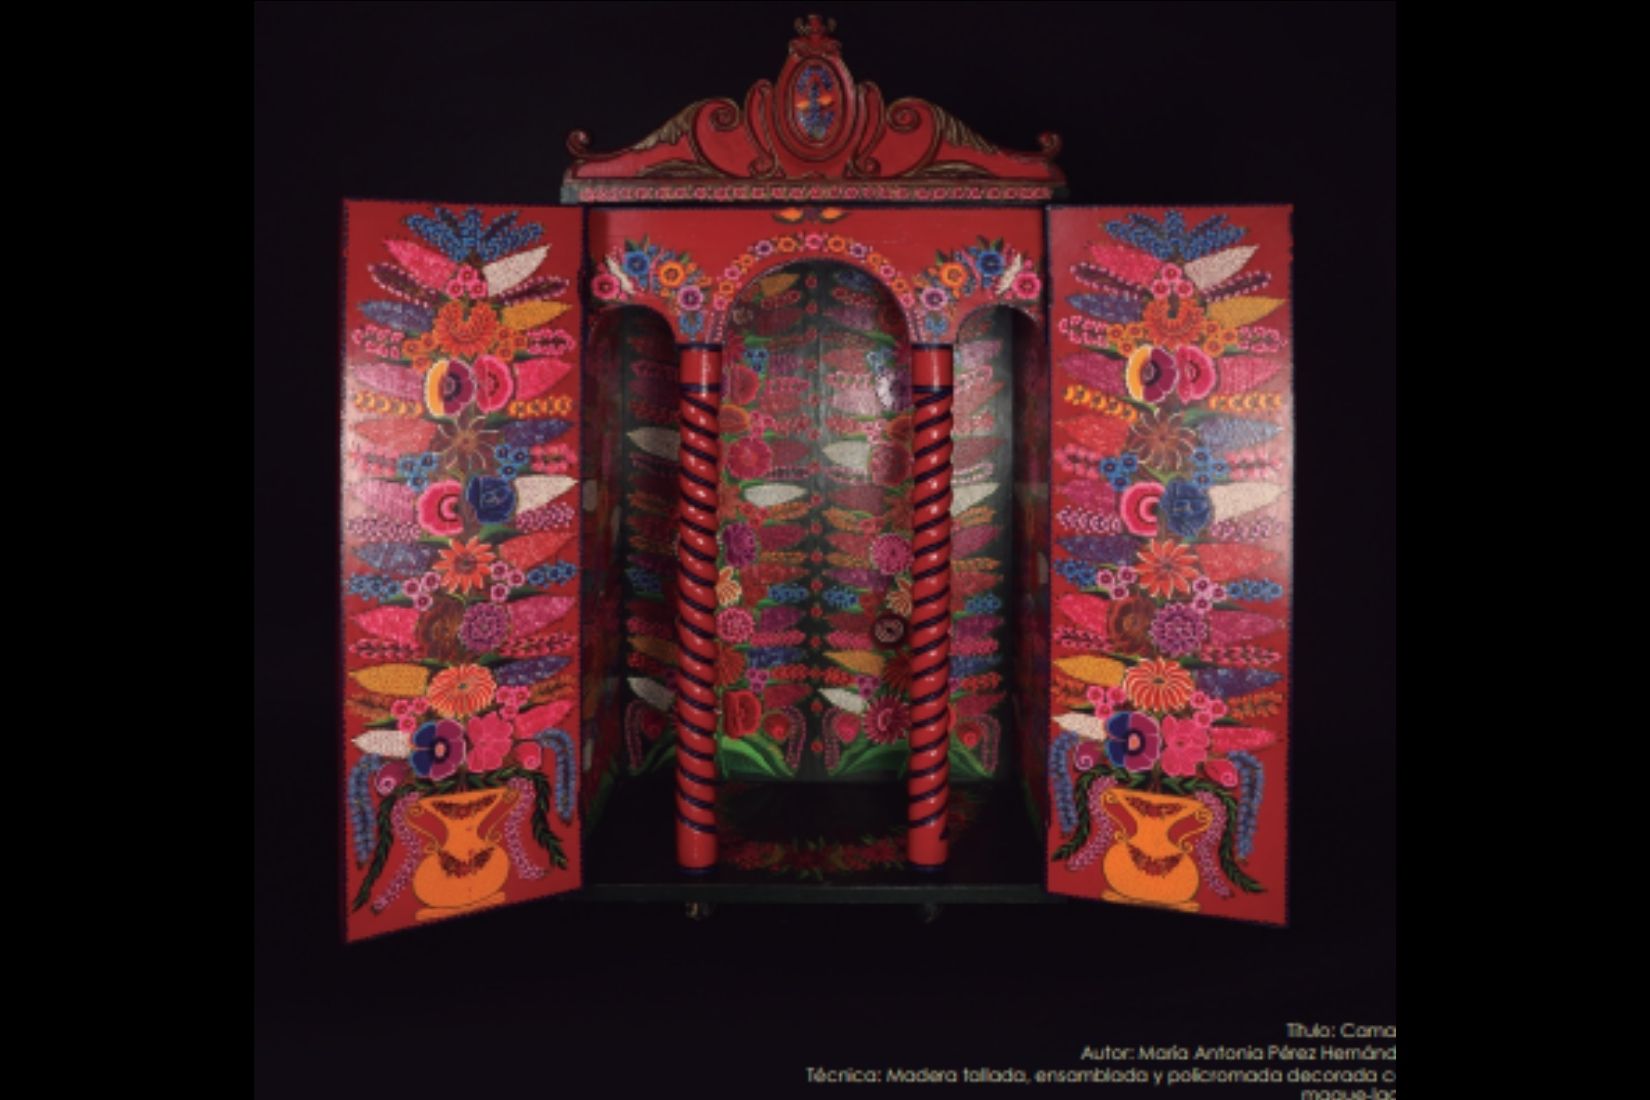 Camarín de madera tallada, ensamblada y policromada decorada con maque o laca. Artesana María Antonia Pérez Hernández. Chiapa de Corzo, Chis. 1995. Col. Part. (Foto: Jasso).